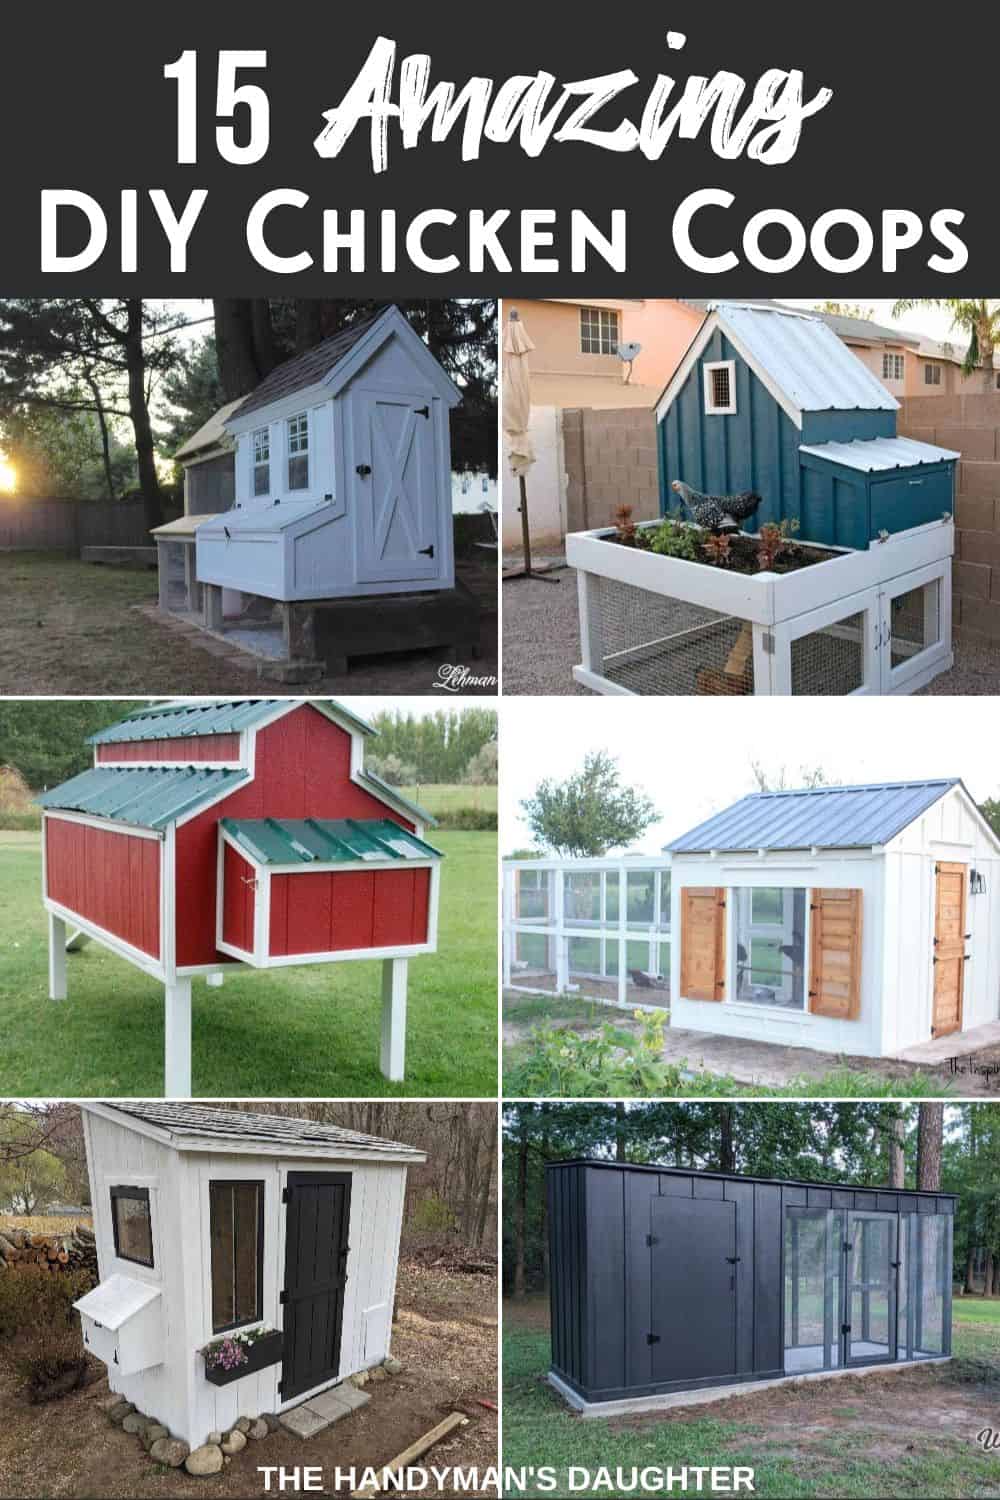 DIY chicken coops